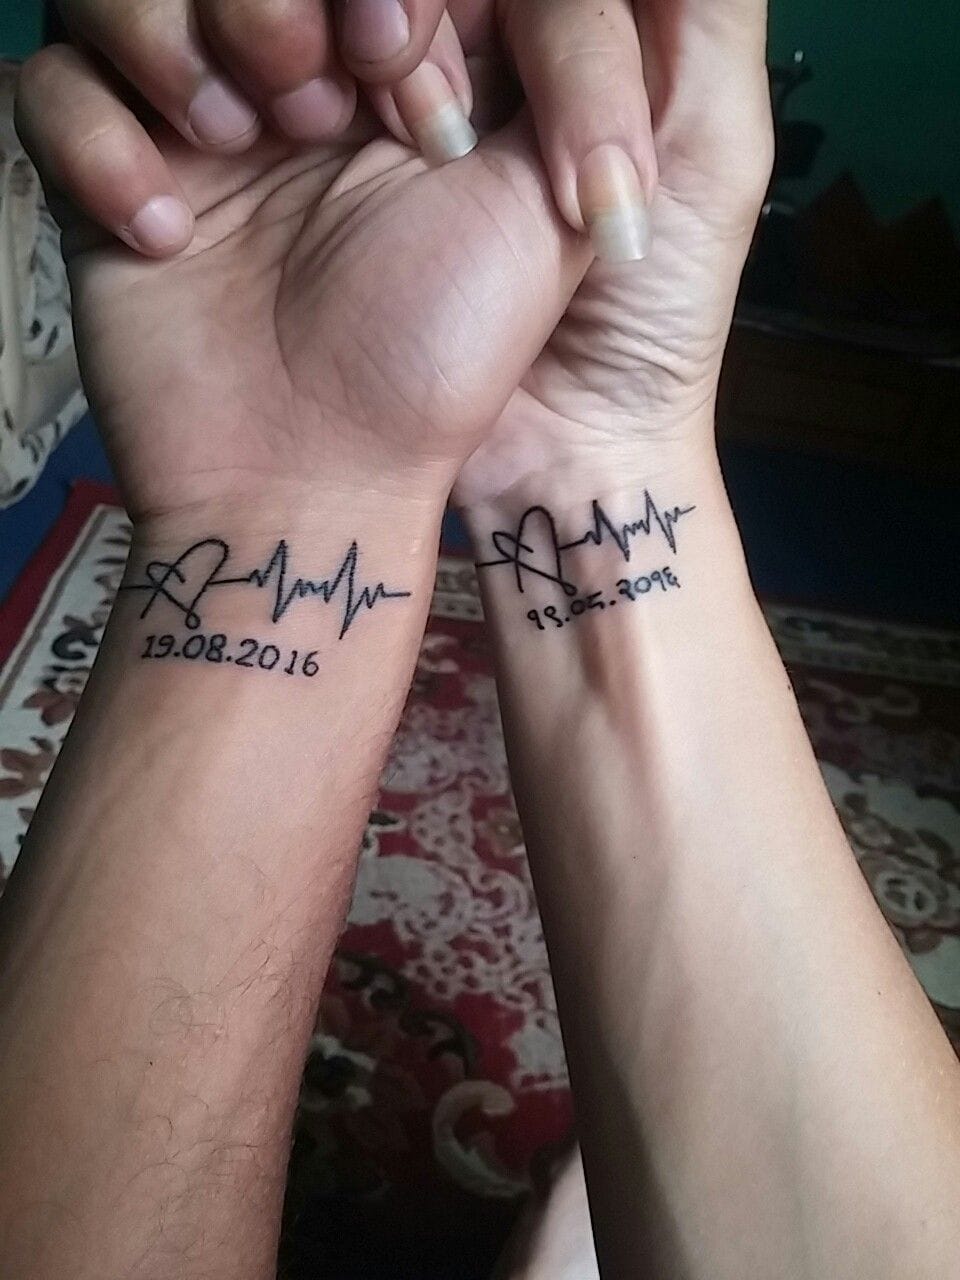 Our matching wedding date tattoos   Wedding date tattoos Date tattoos  Matching tattoos